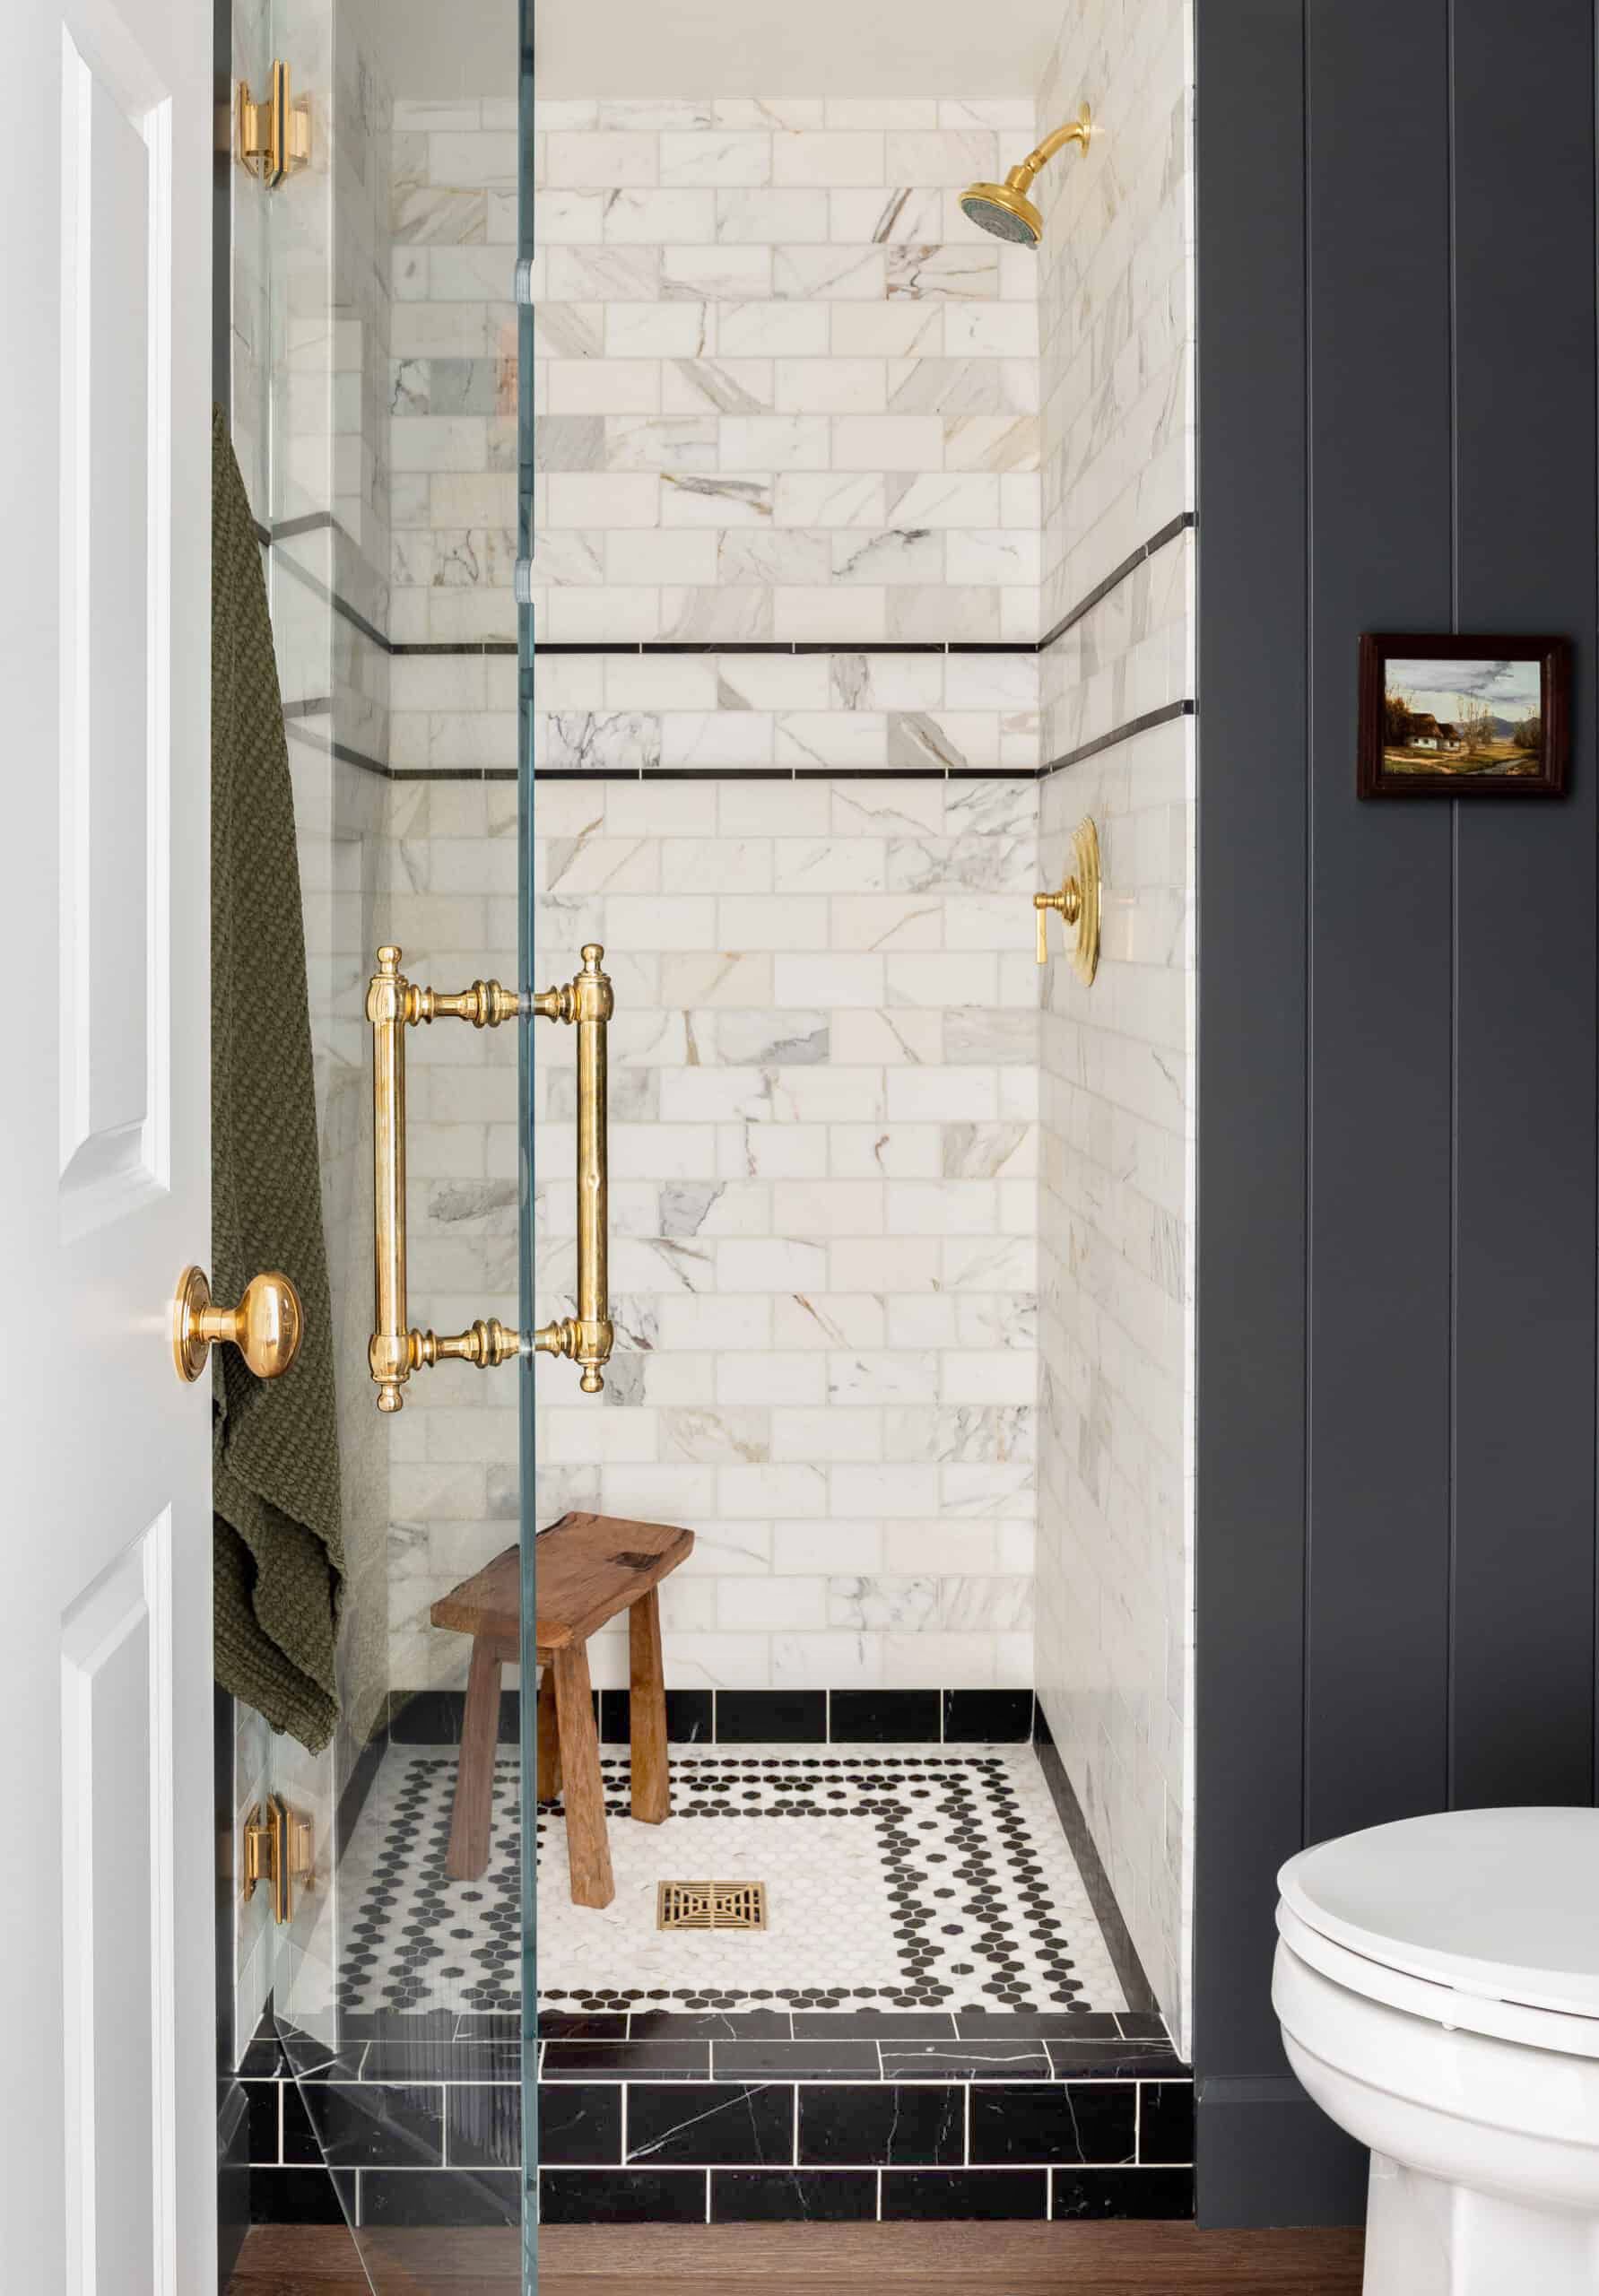 4 Bathroom Tile Ideas - Bath Tile Backsplash and Floor Designs